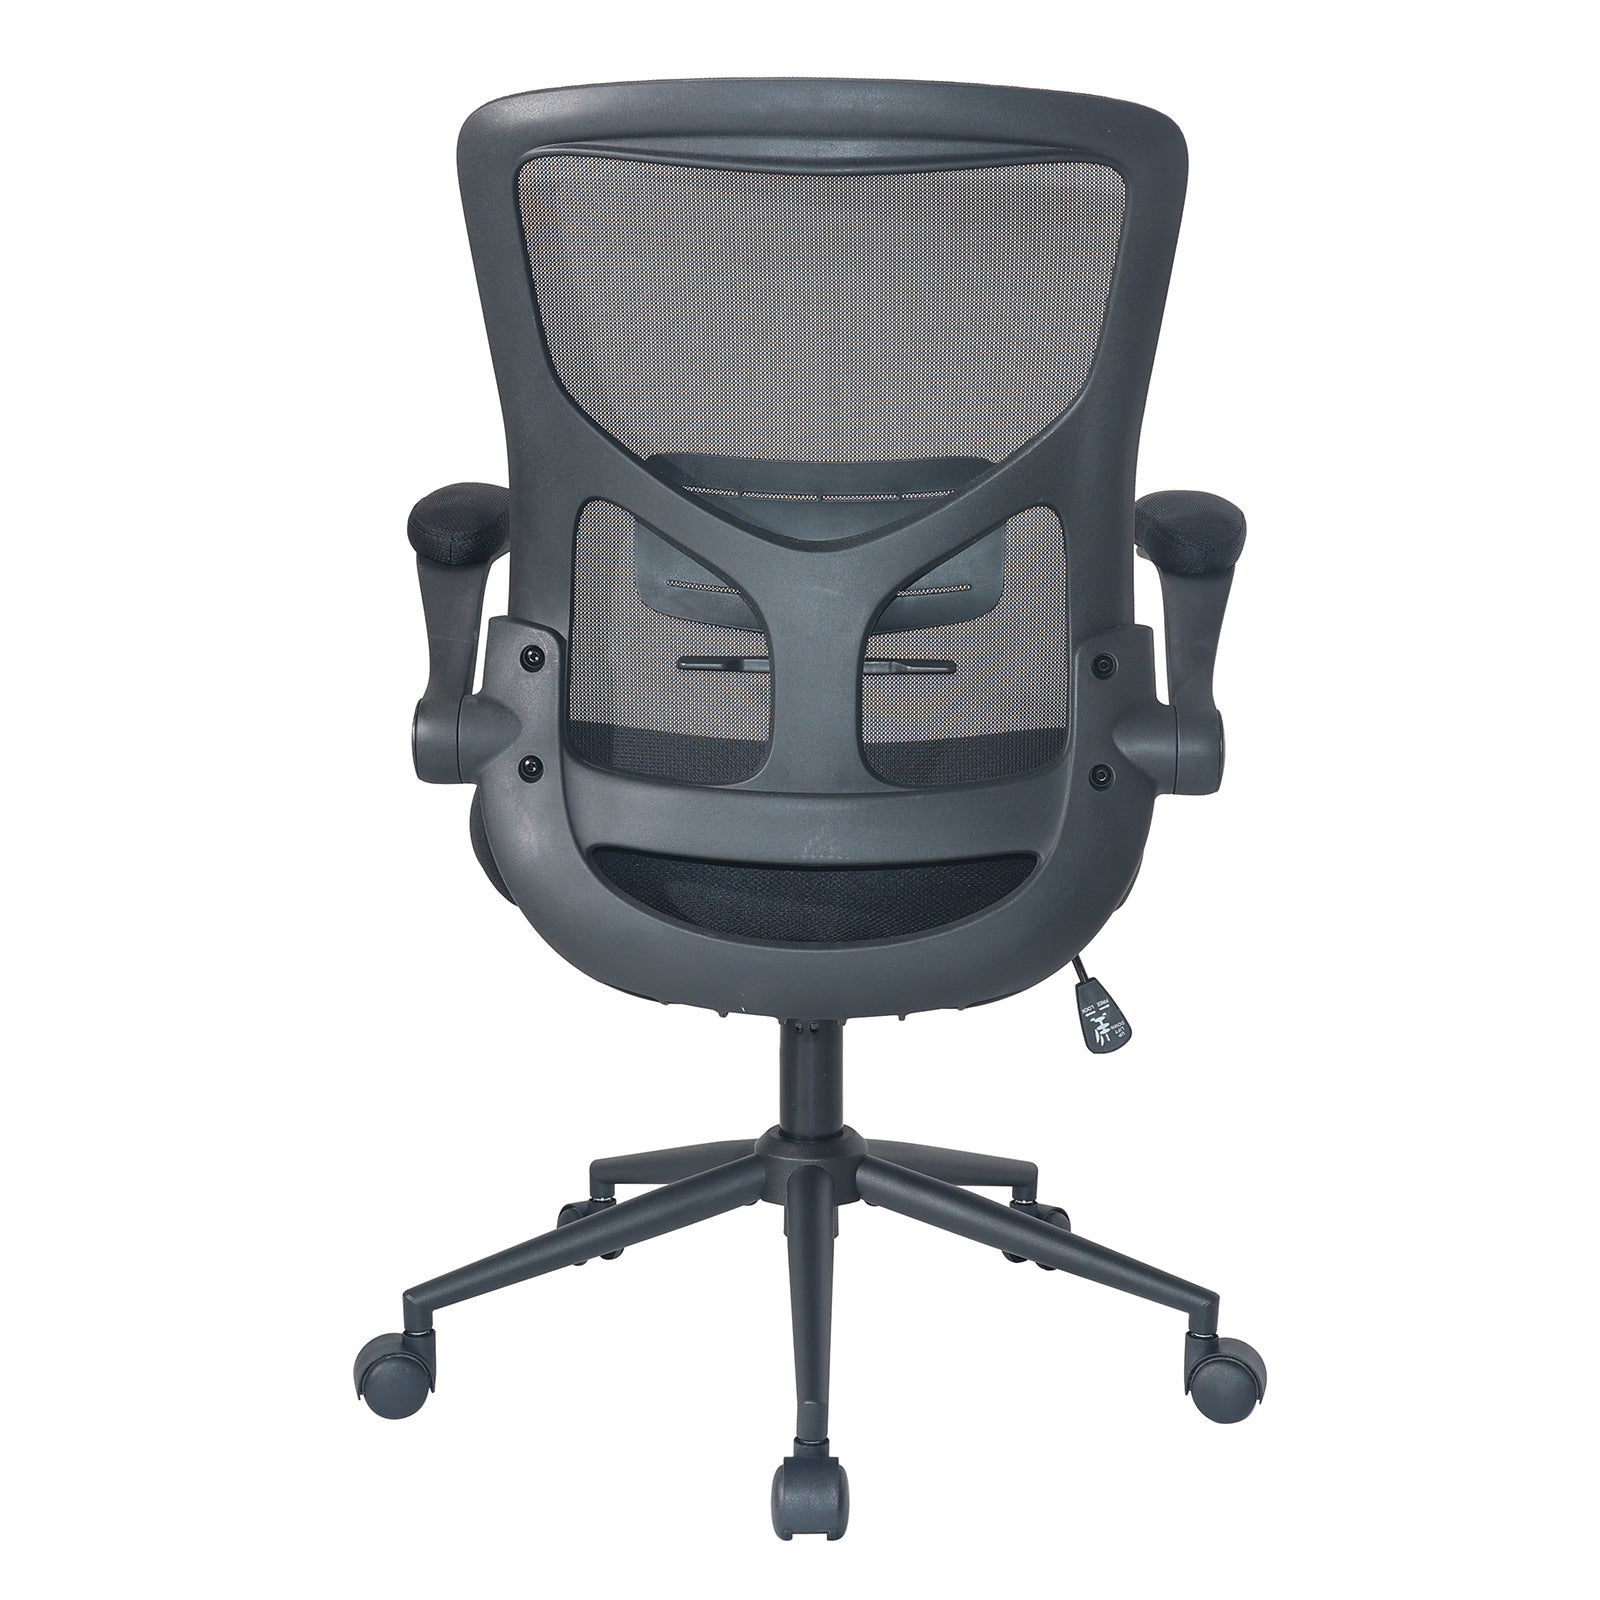 KLASIKA Office Desk Chair Ergonomic Mesh Chair Adjustable Height